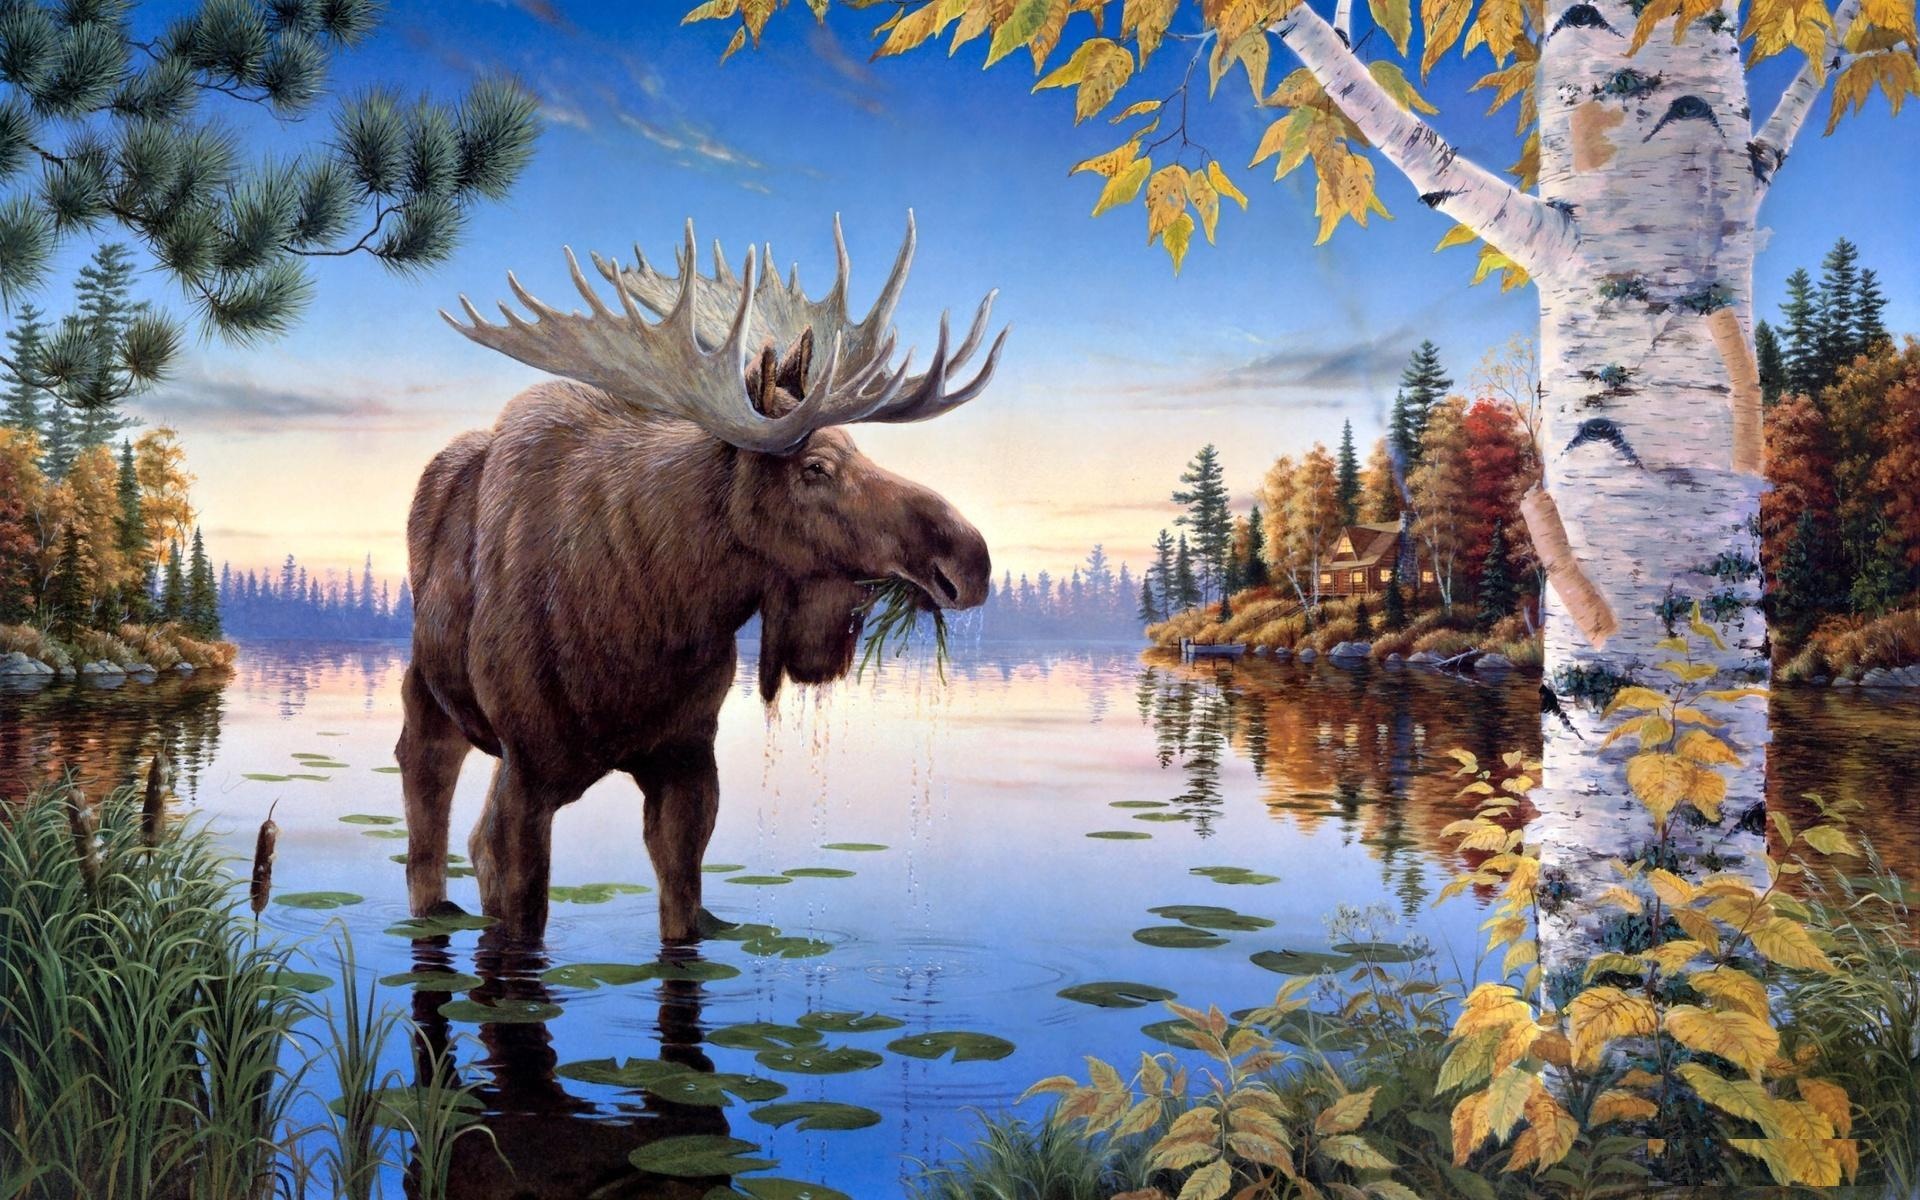 HD moose wallpapers, Cool nature photos, Stunning backgrounds, Wallpaper inspiration, 1920x1200 HD Desktop